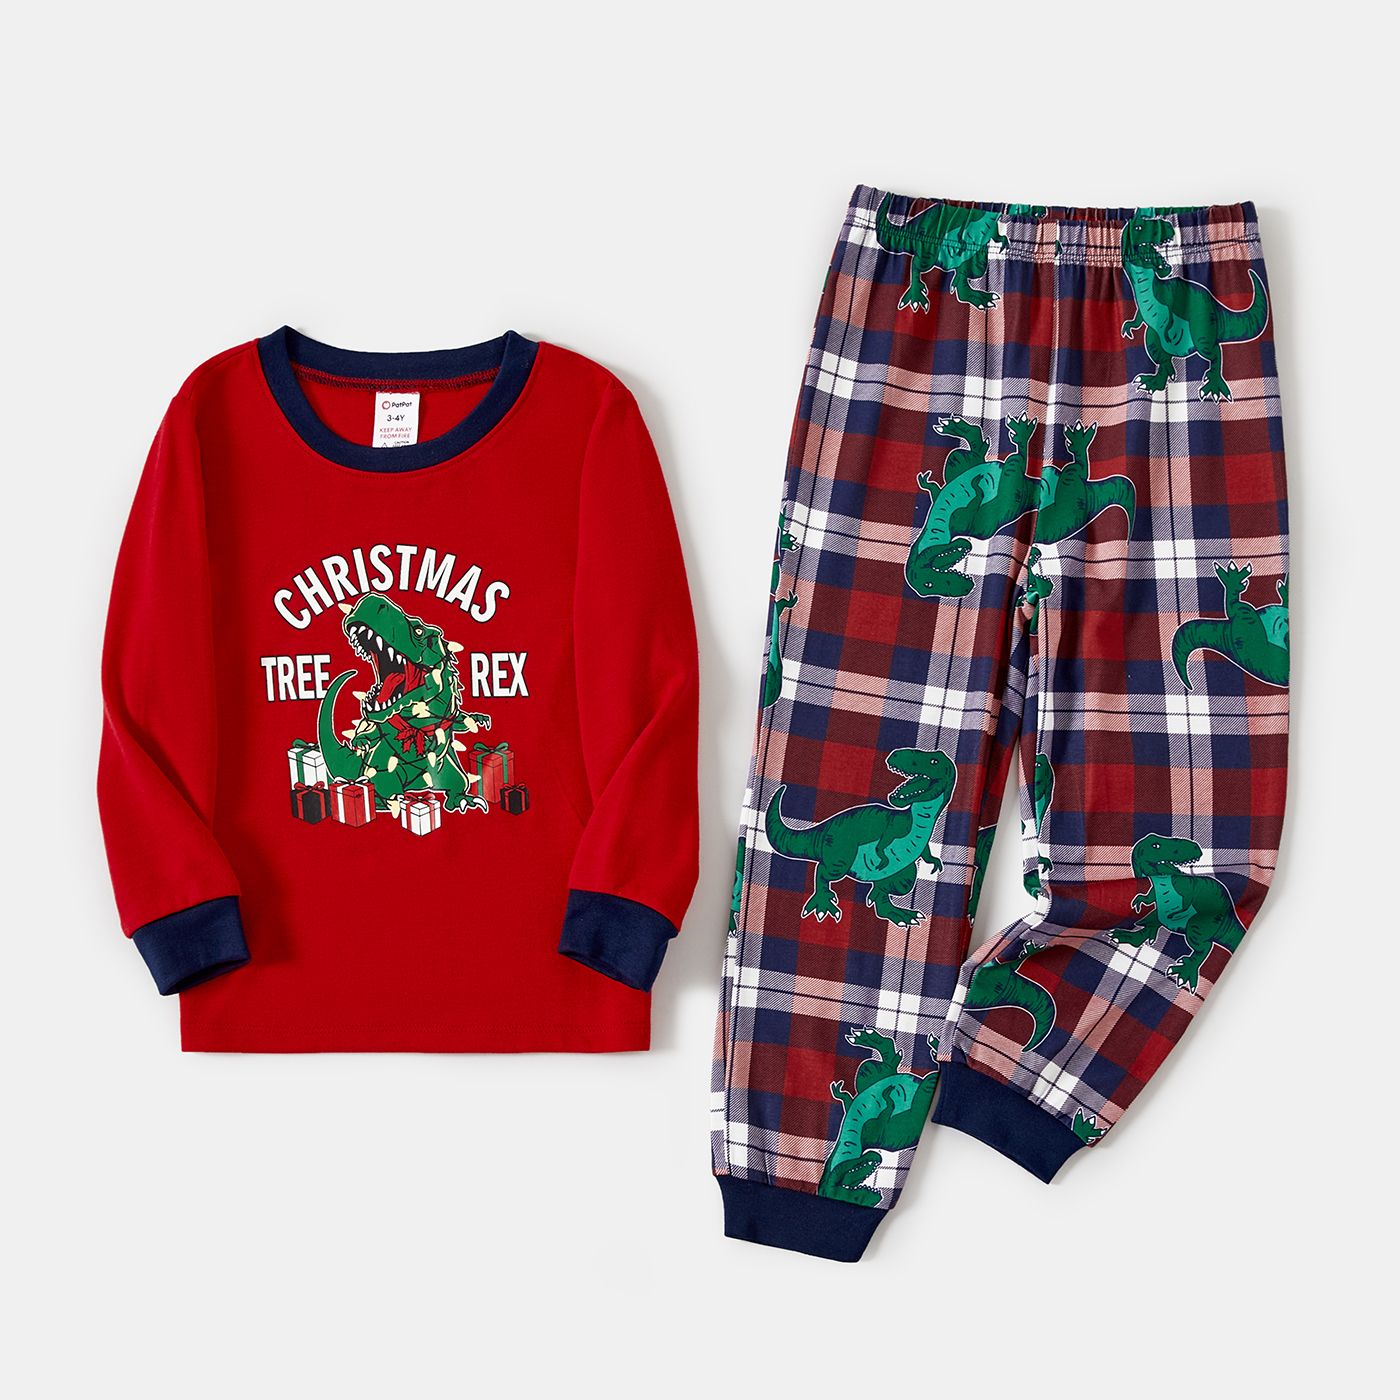 Christmas Glow In The Dark Family Matching Dinosaur Print Long-sleeve Pajamas Sets(Flame Resistant)